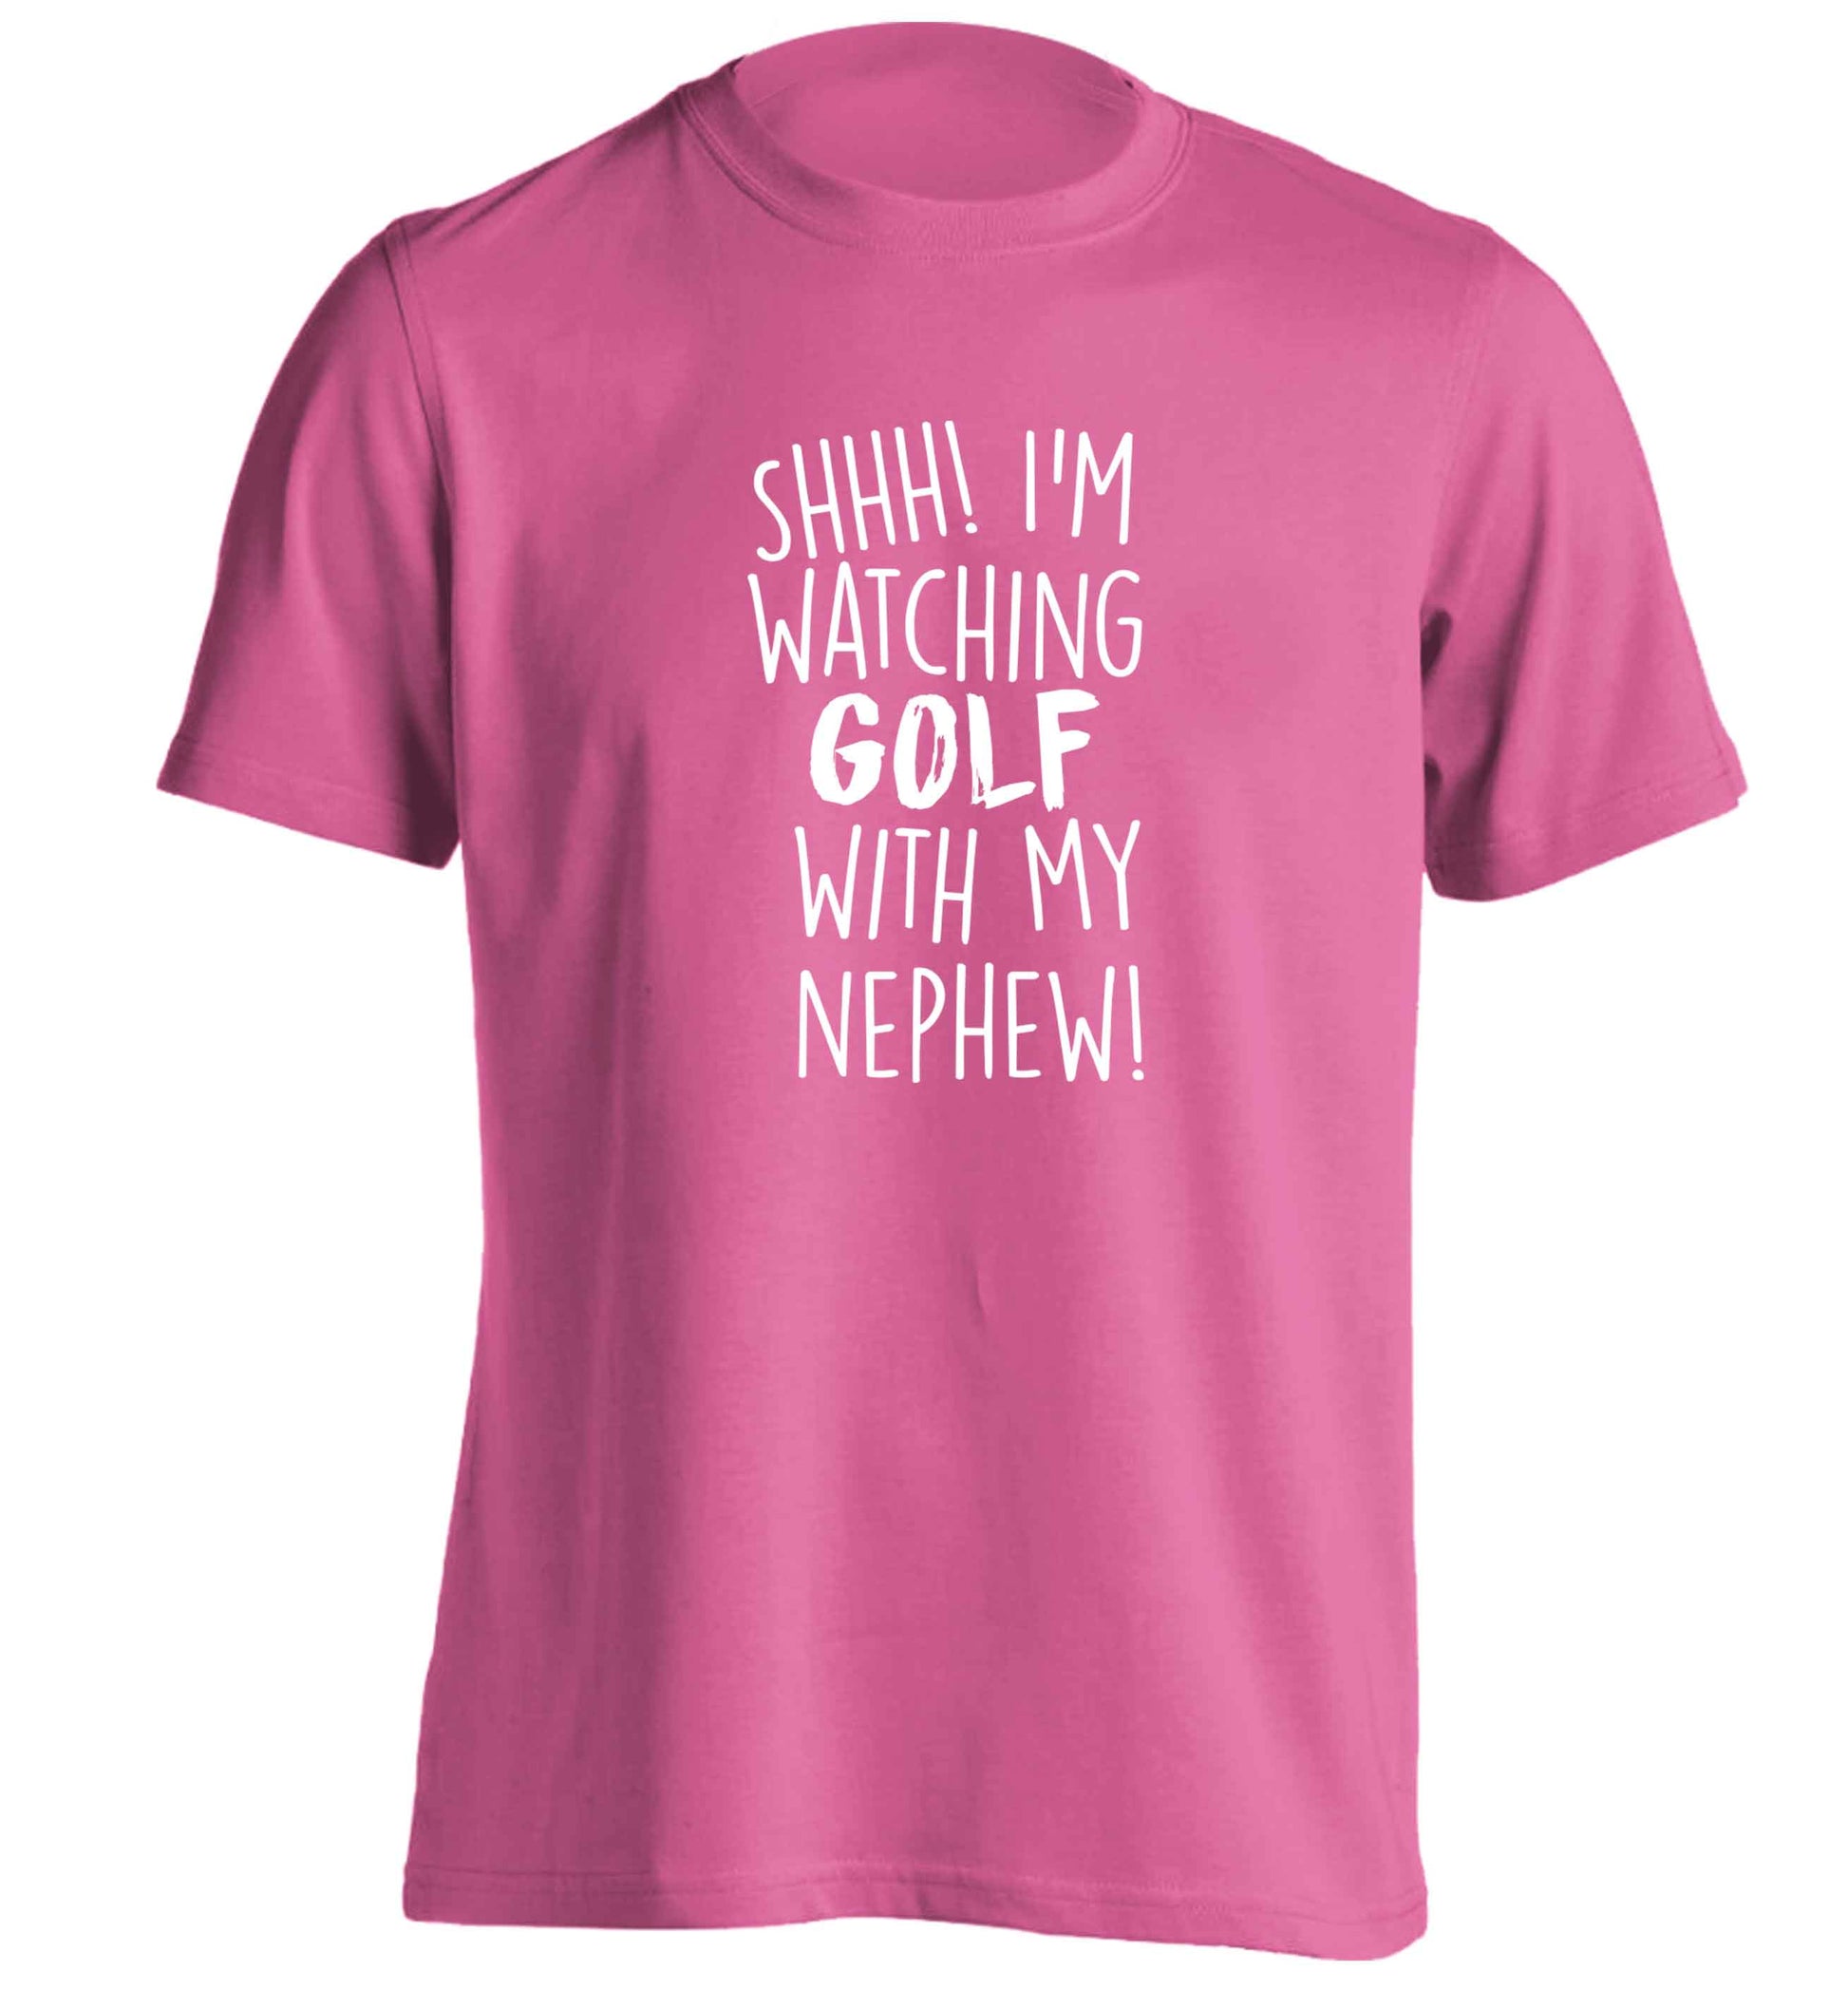 Shh I'm watching golf with my nephew adults unisex pink Tshirt 2XL